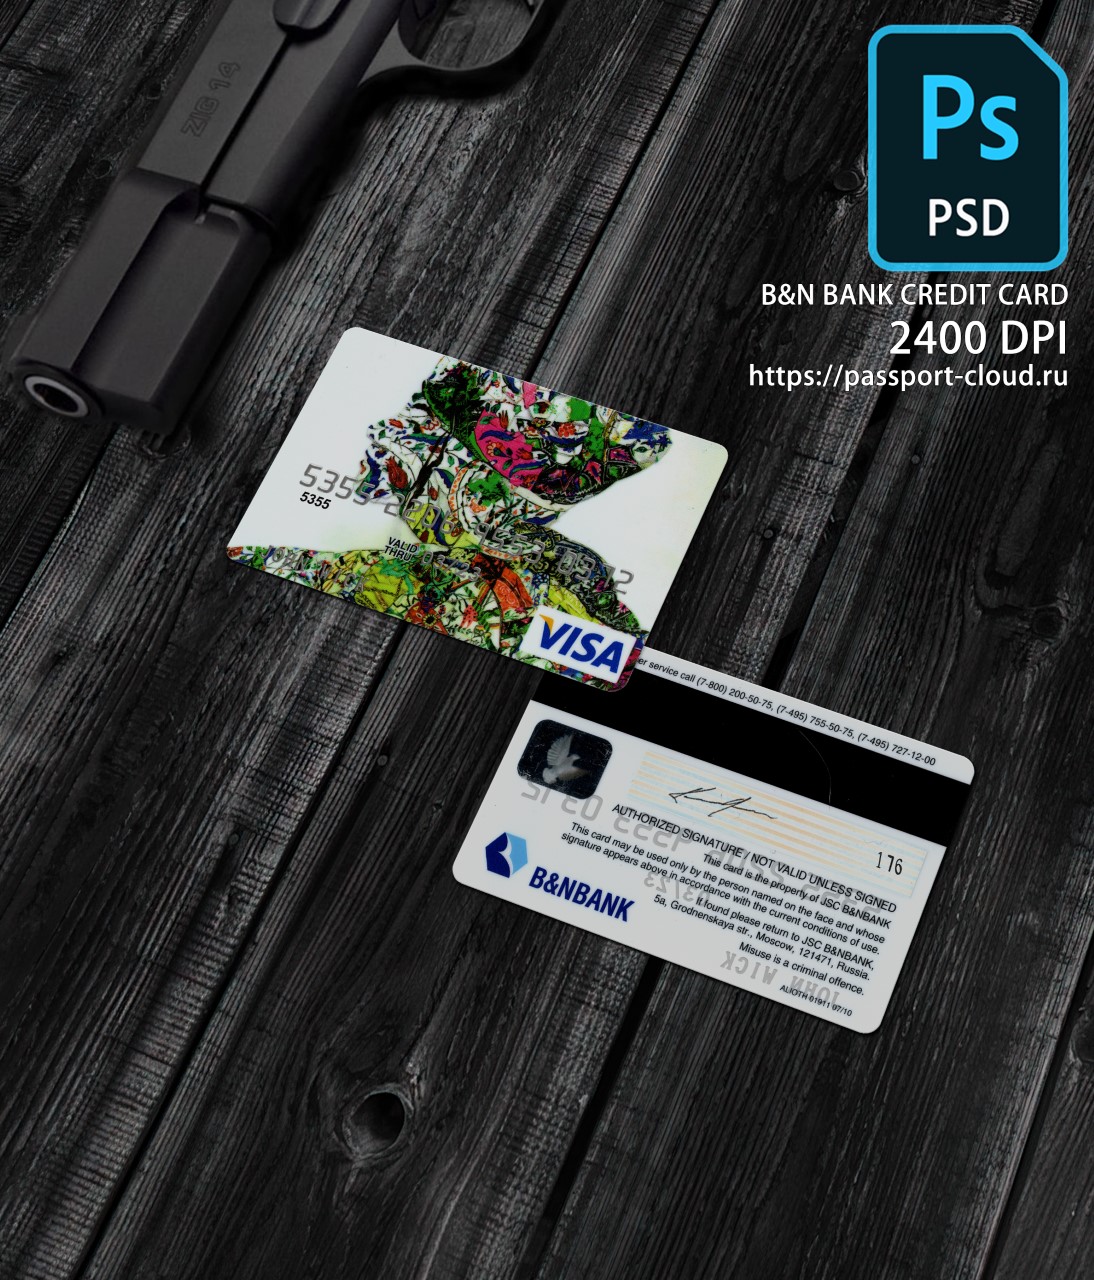 B&N Bank Credit Card PSD1